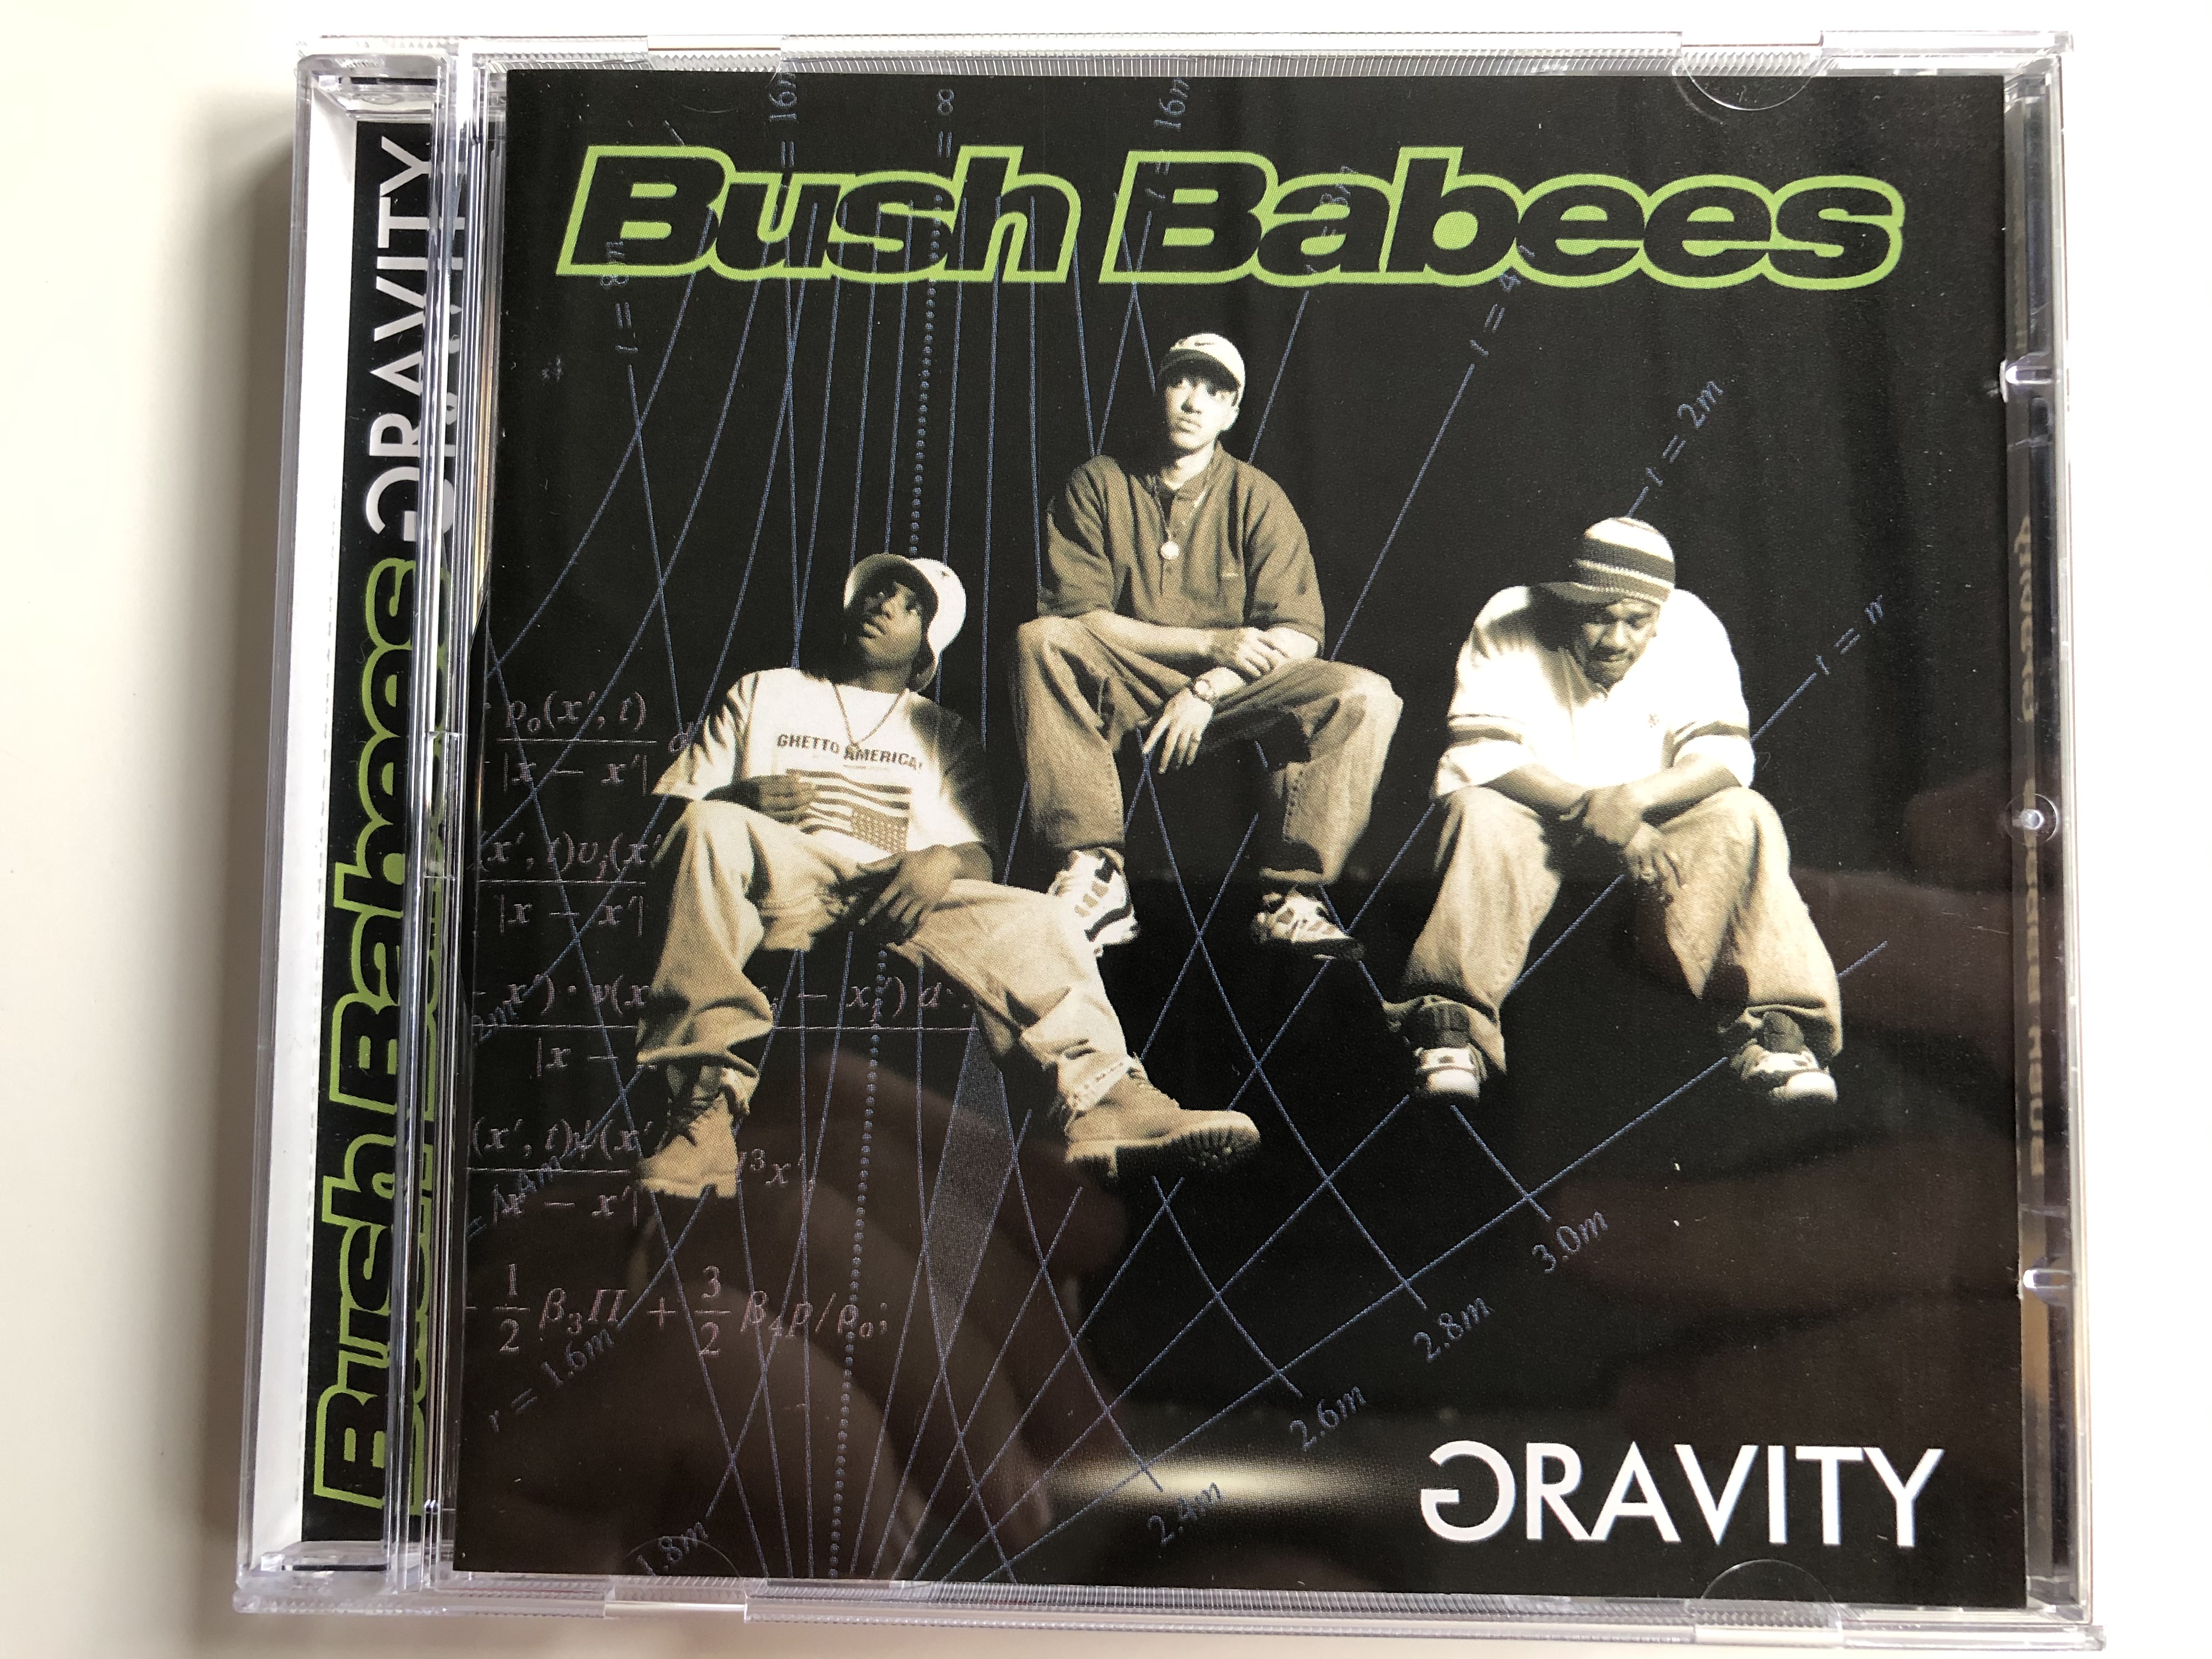 bush-babees-gravity-warner-bros.-records-audio-cd-1996-9362-46446-2-1-.jpg